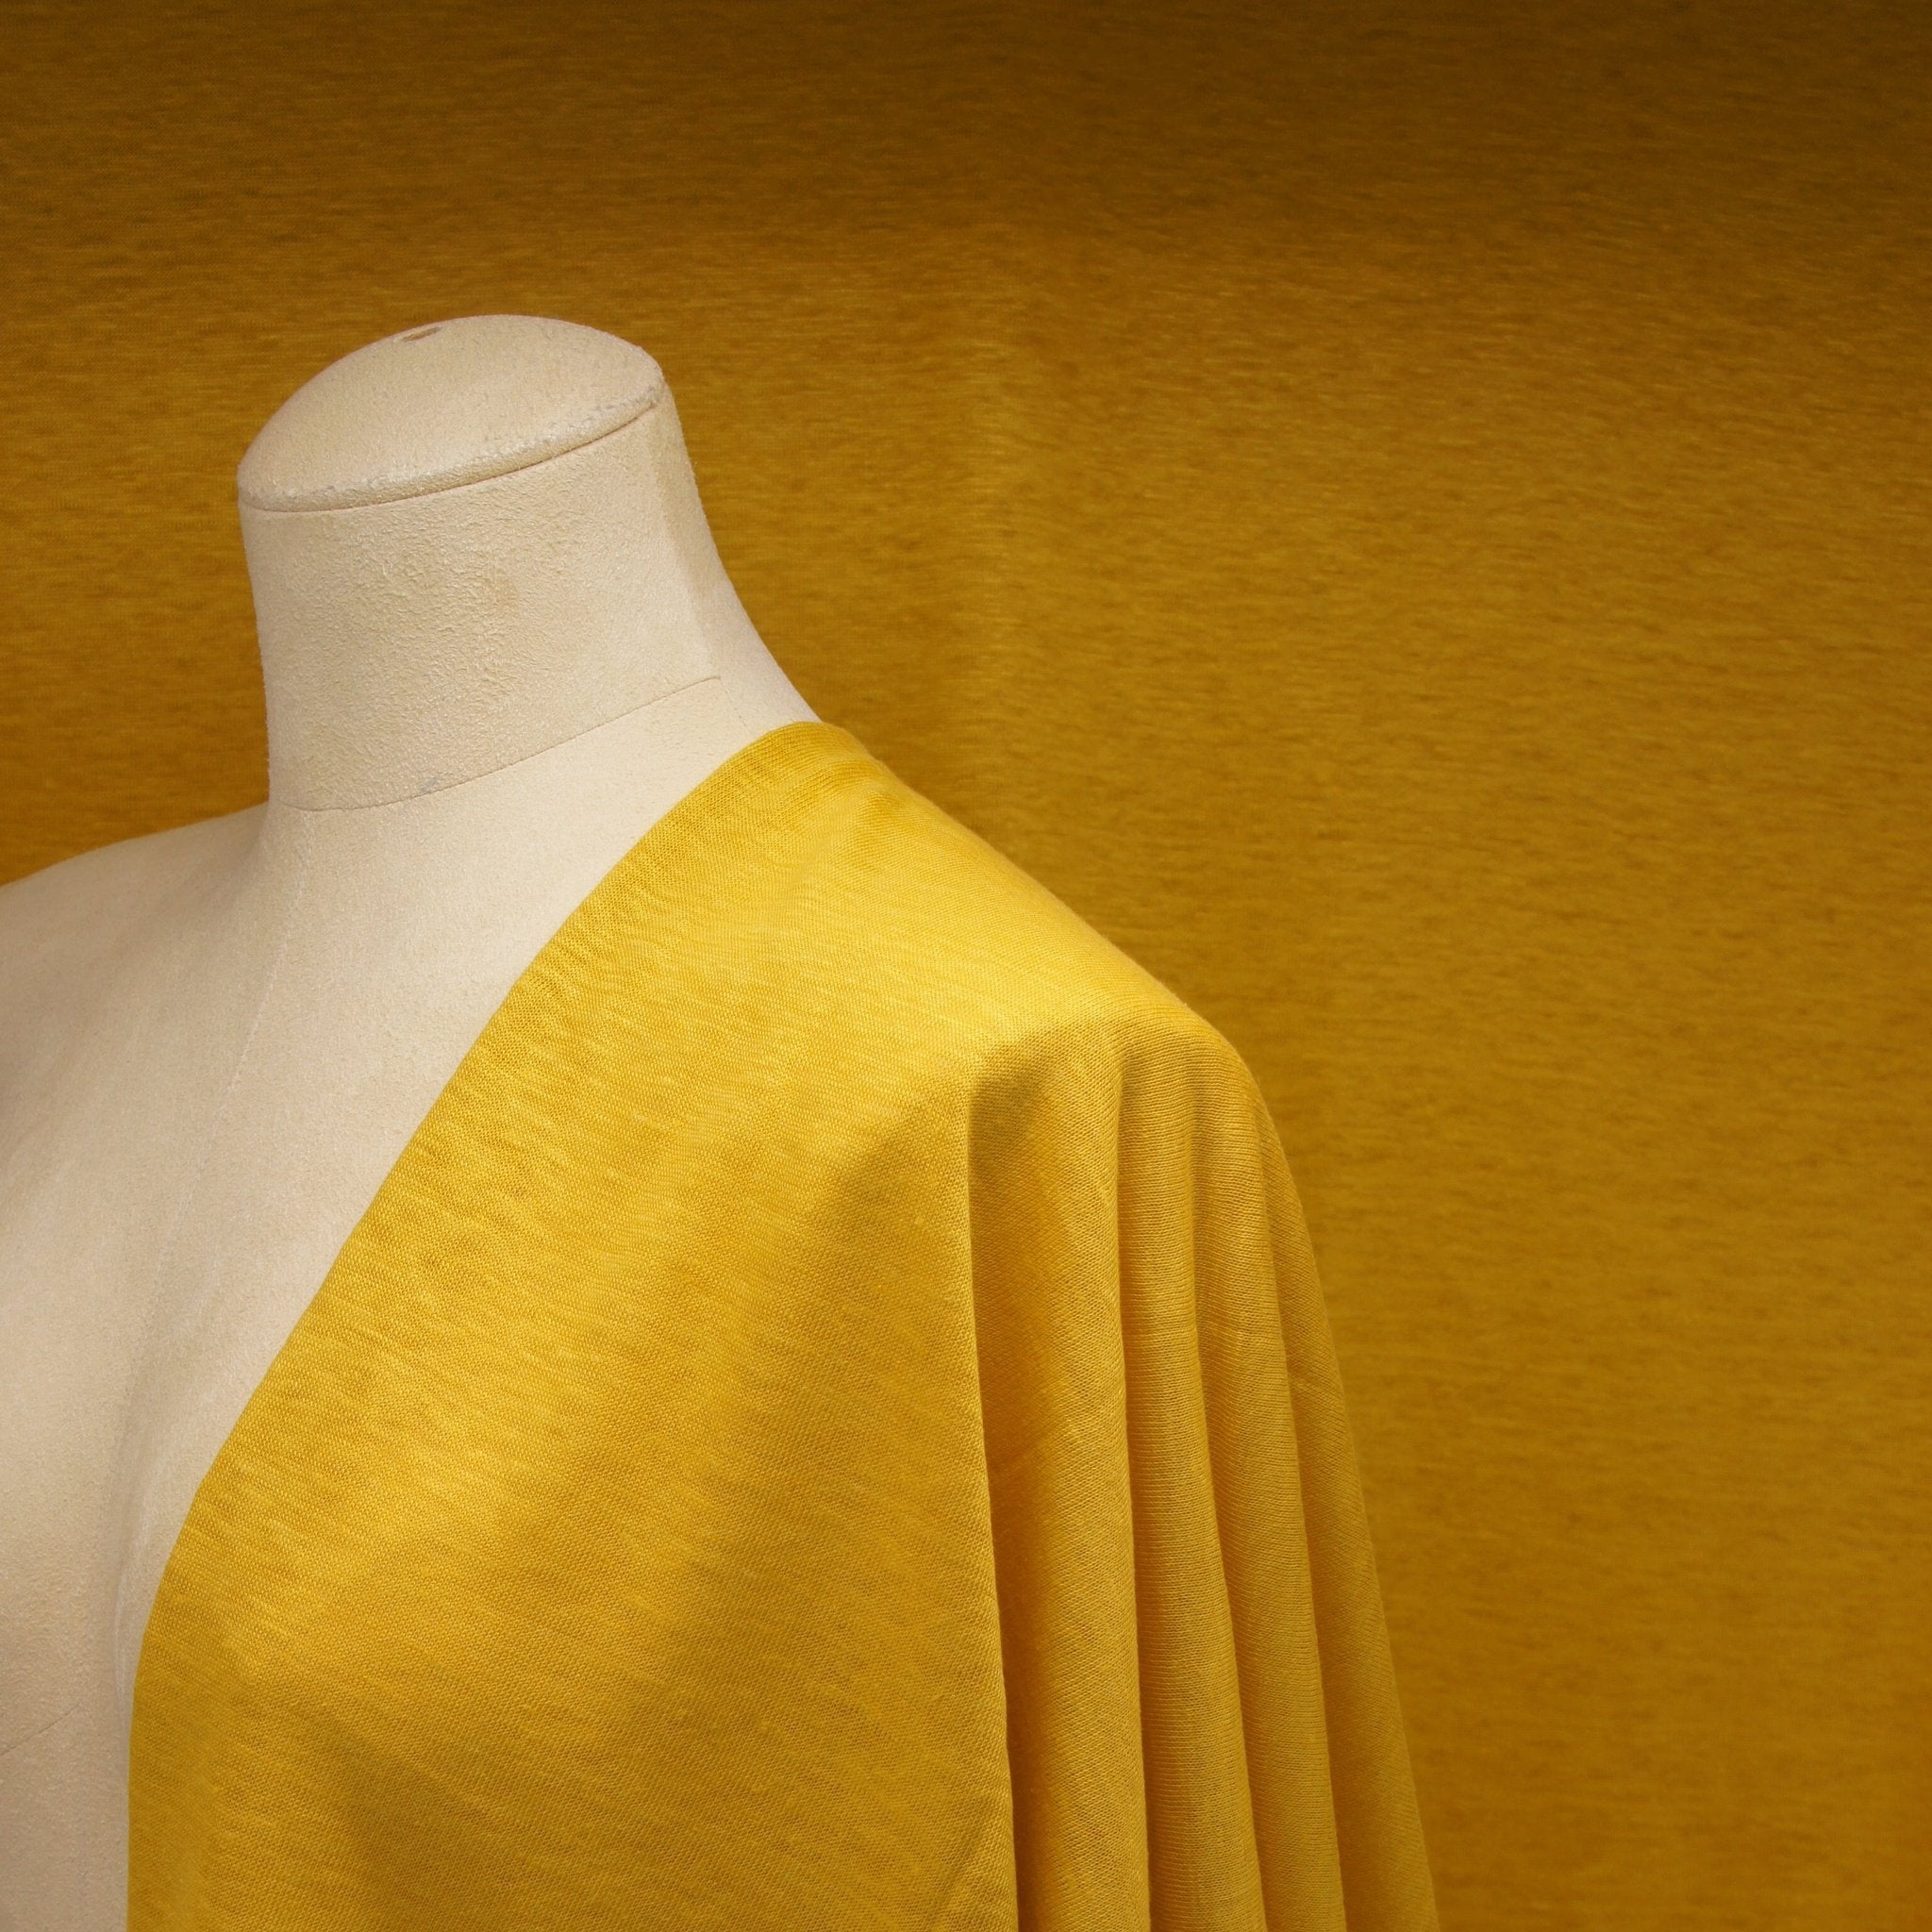 Japanese Linen Jersey - Yellow